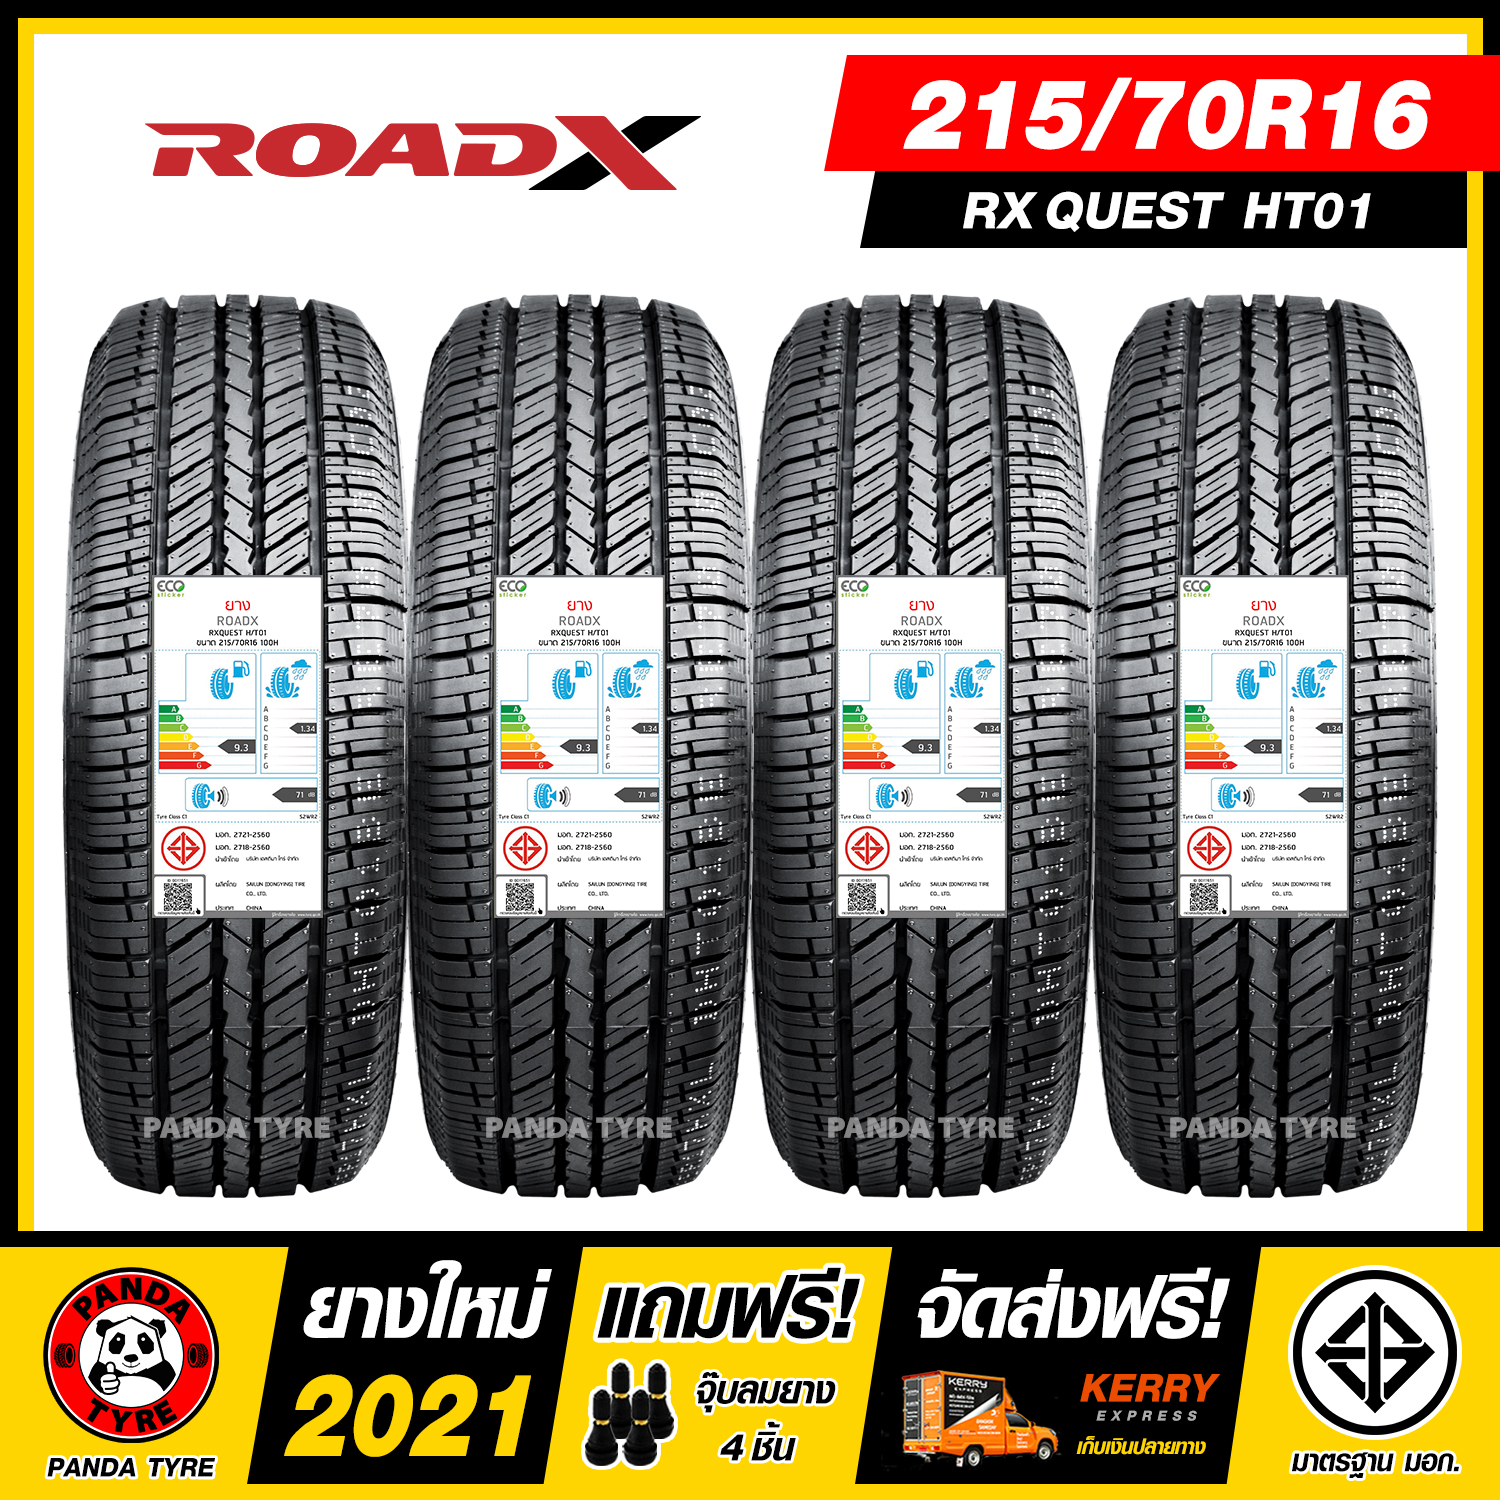 ROADX 215/70R16 ยางรถยนต์ขอบ16 รุ่น RXQUEST HT01 - 4 เส้น (ยางใหม่ผลิตปี 2021)